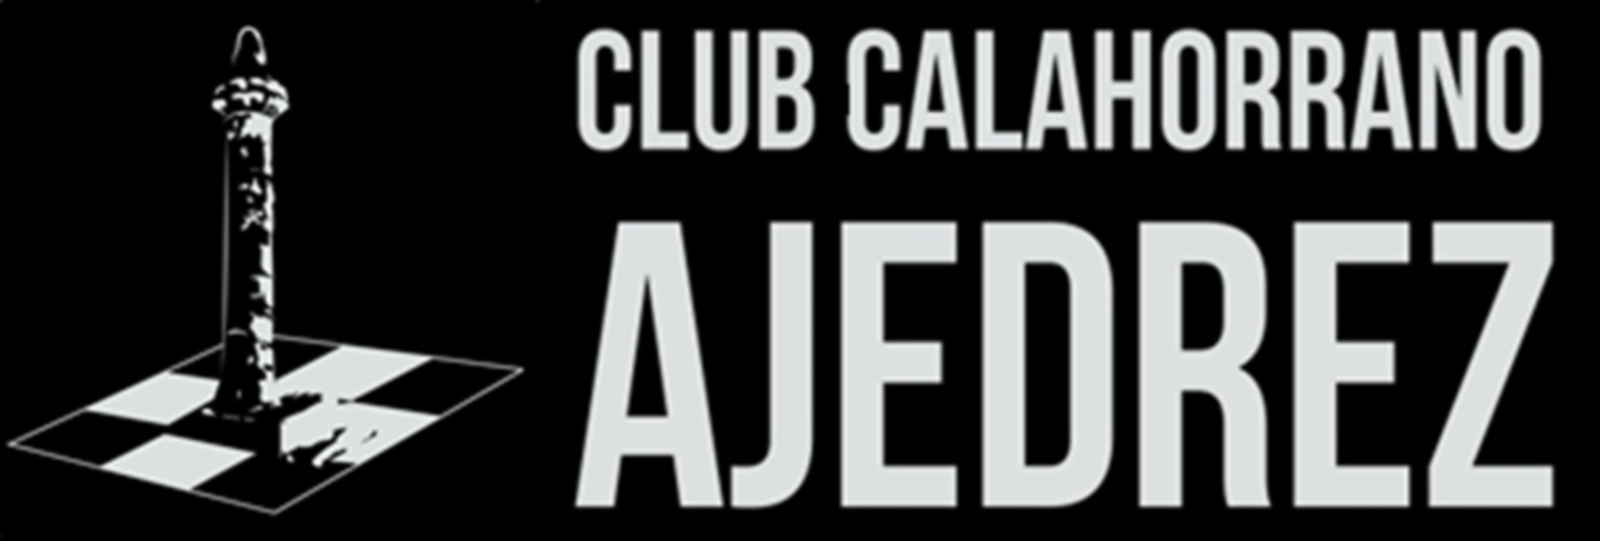 Club Calahorrano Ajedrez